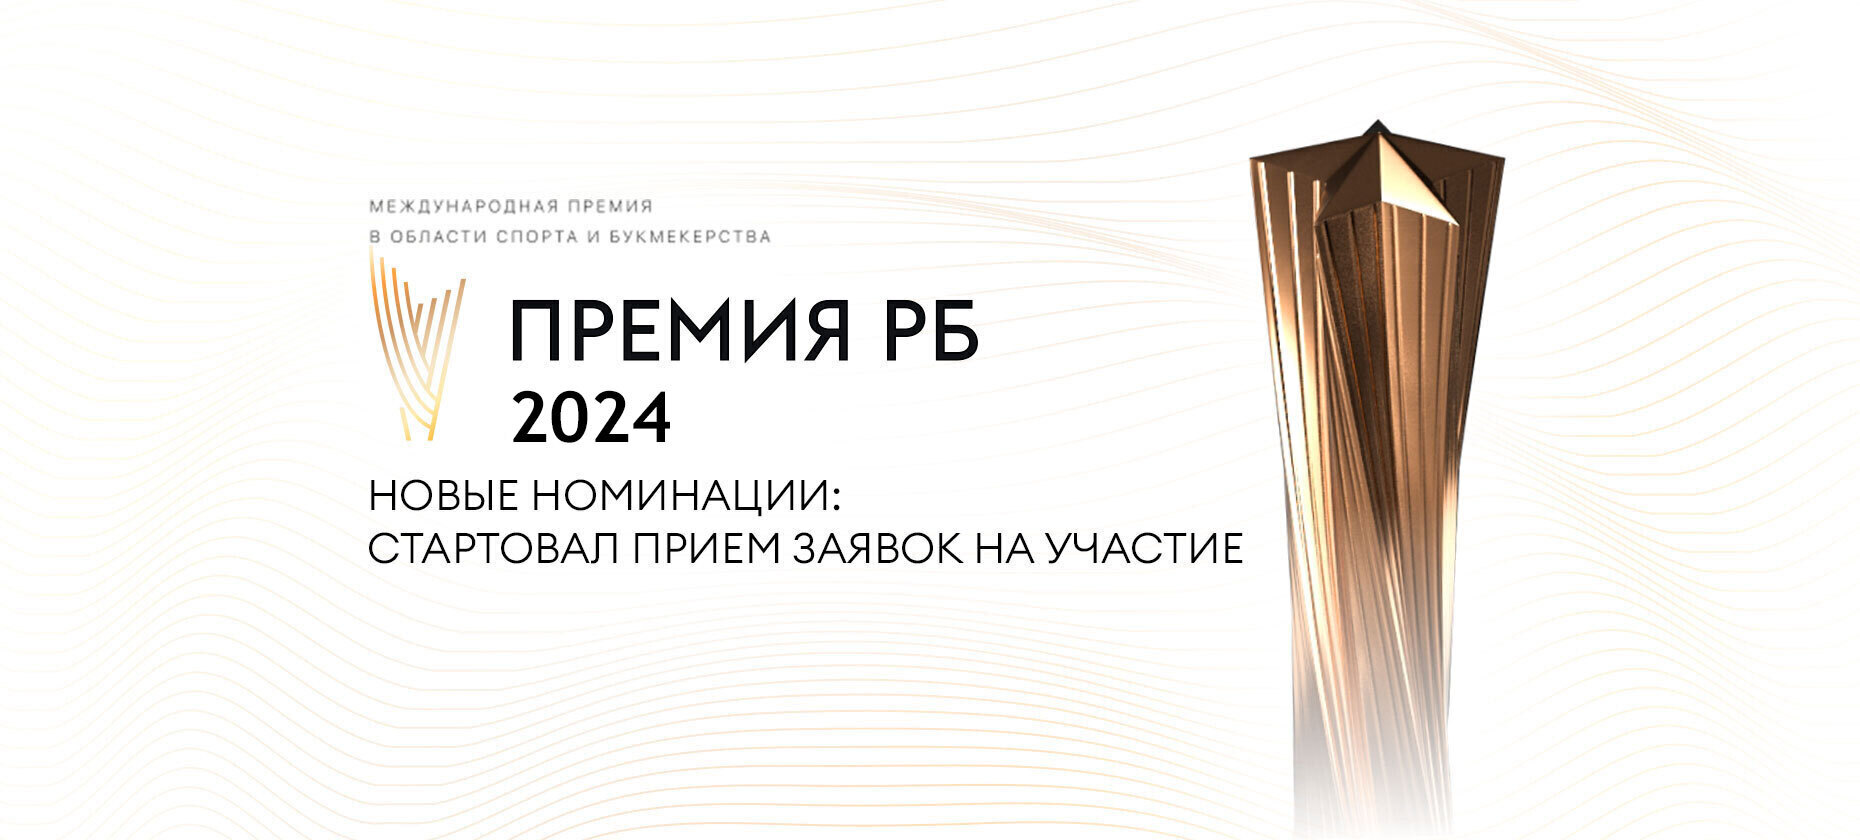 Литературная премия Беларуси 2024. Баннер года Беларусь 2024. Рцэ 2024 беларусь результаты